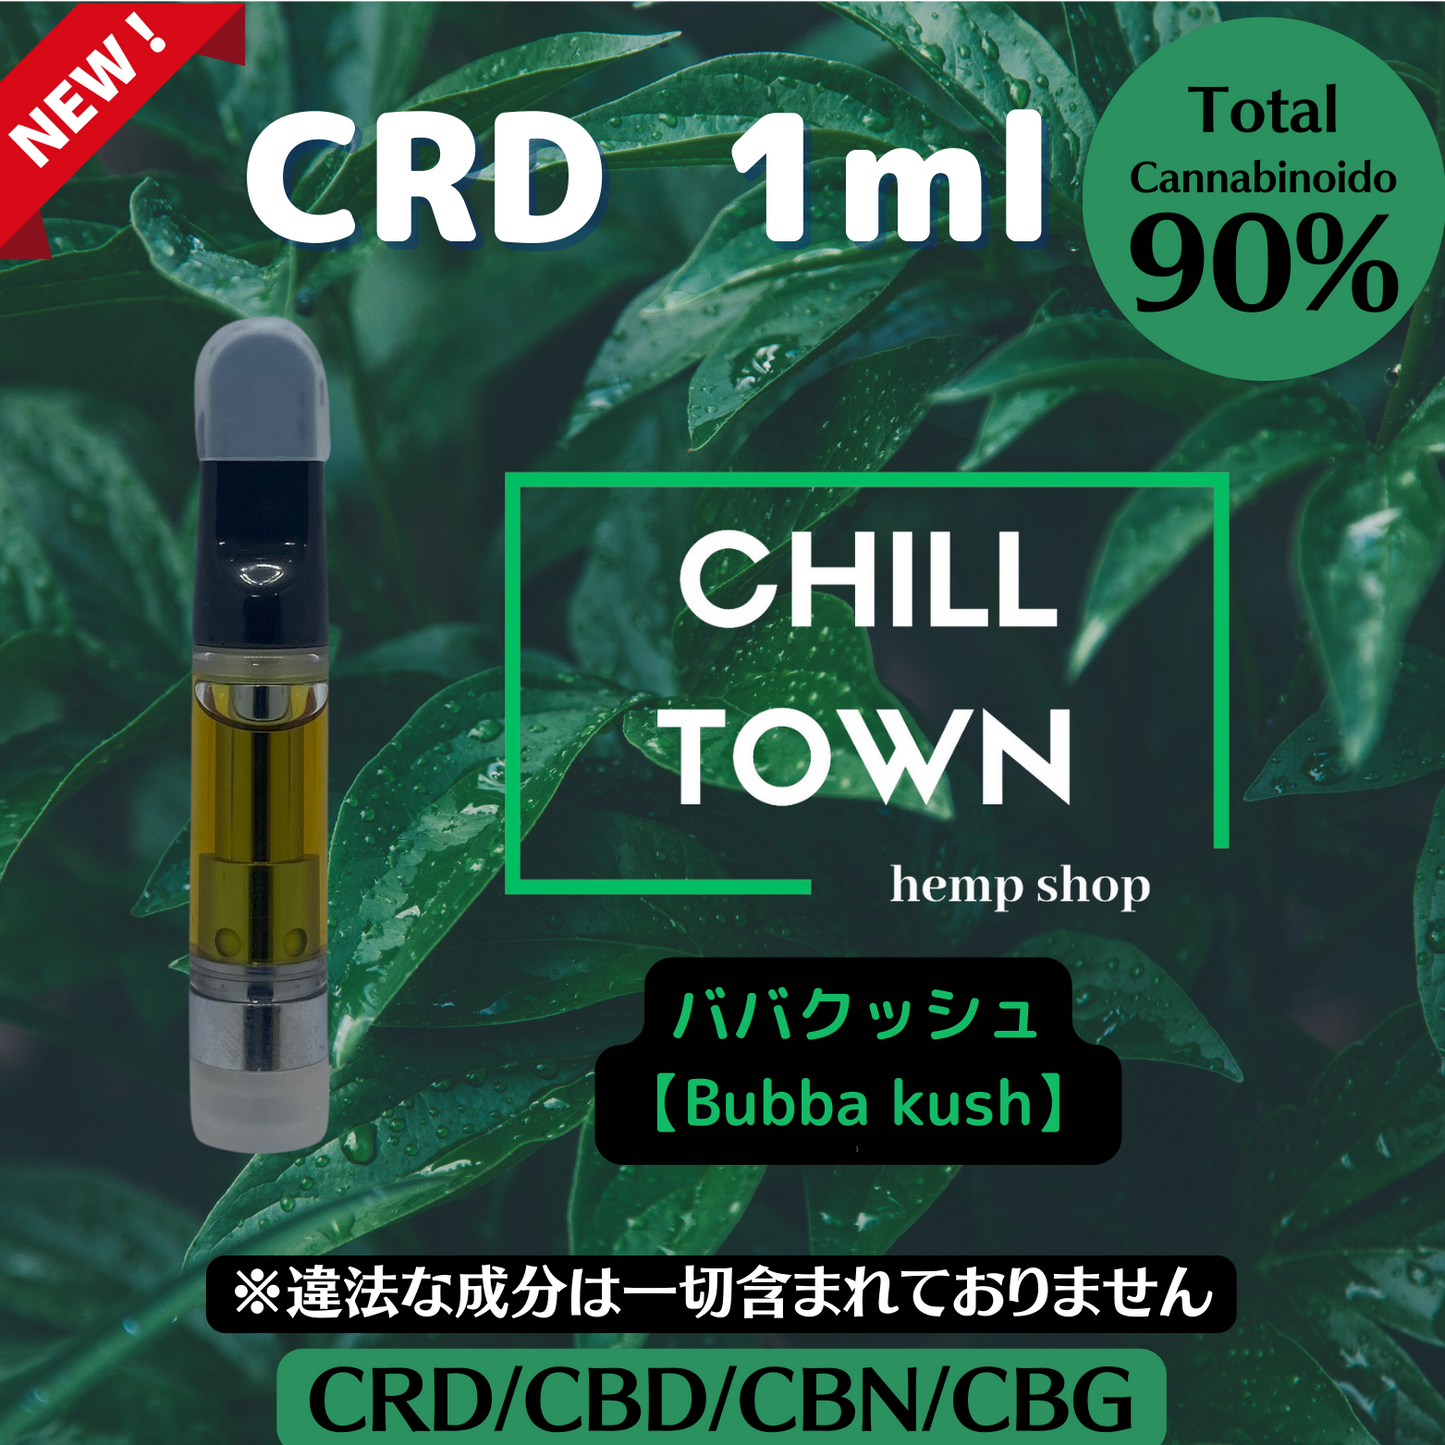 CRD 80% 1ml (Bubba kush) – CHILL TOWN